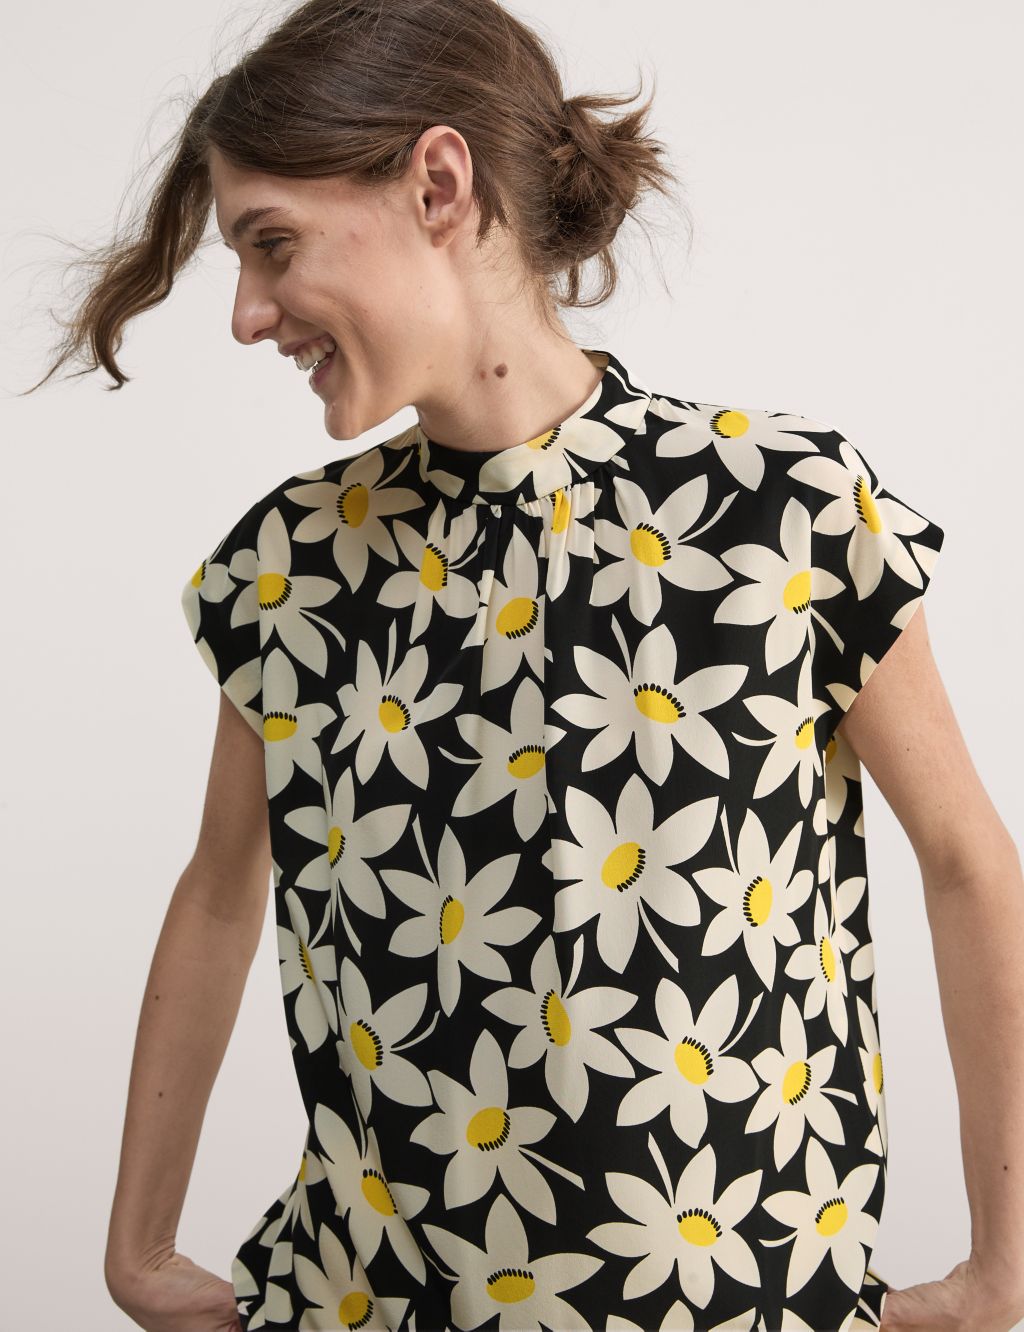 KECKS Women's Shirts Women's Tops Shirts for Women Floral Print